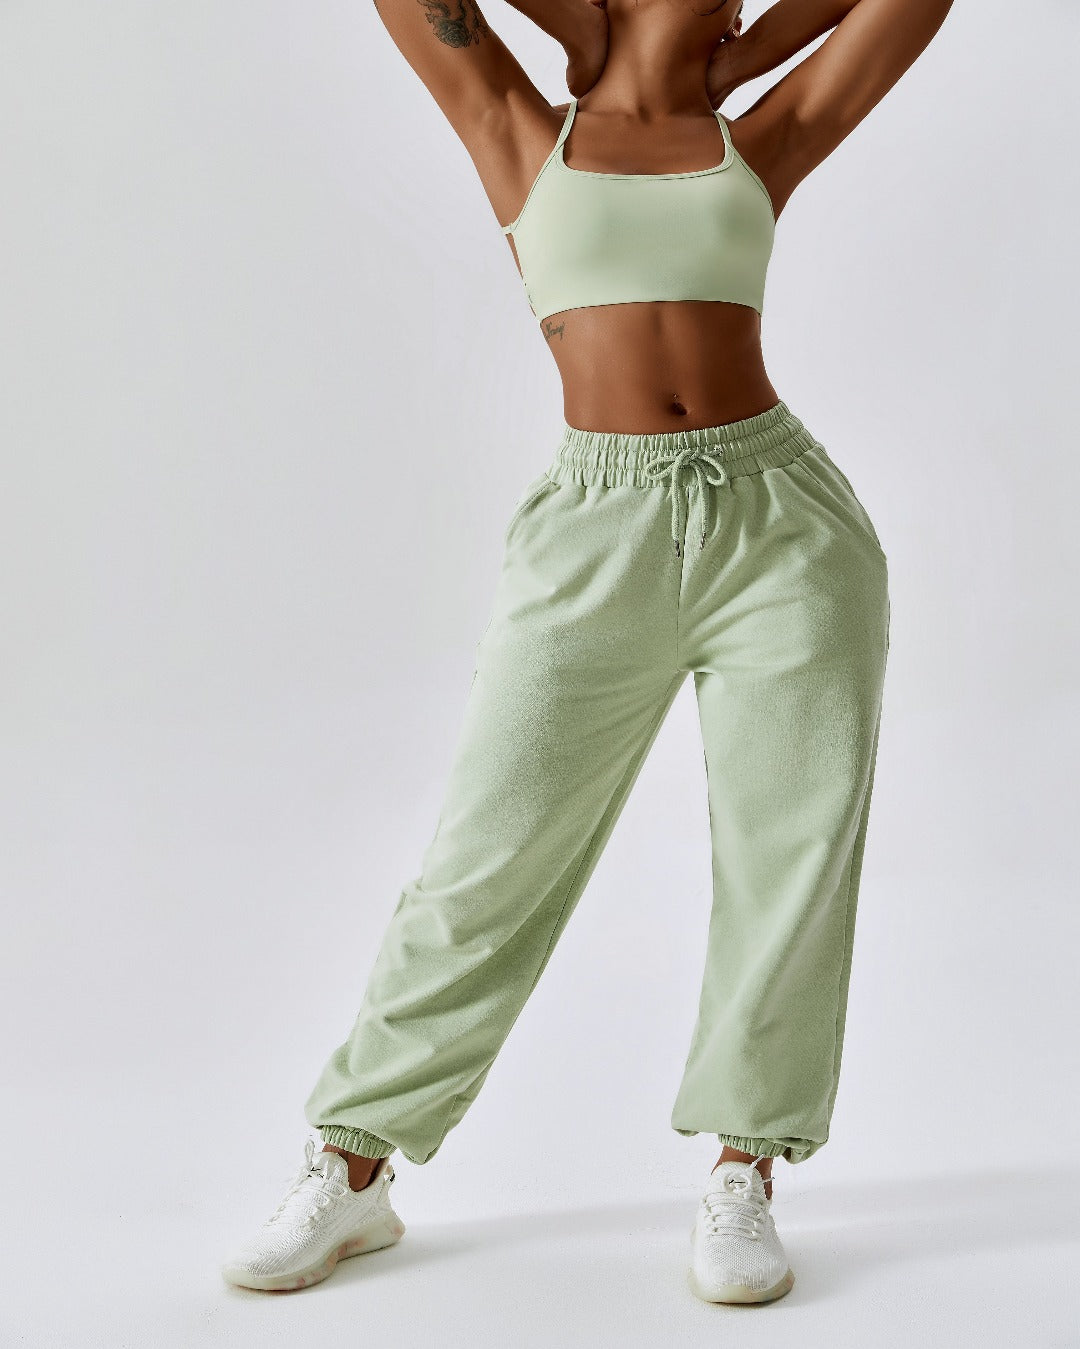 Pea green high waist drawstring waistband cuffed ankles joggers bottoms